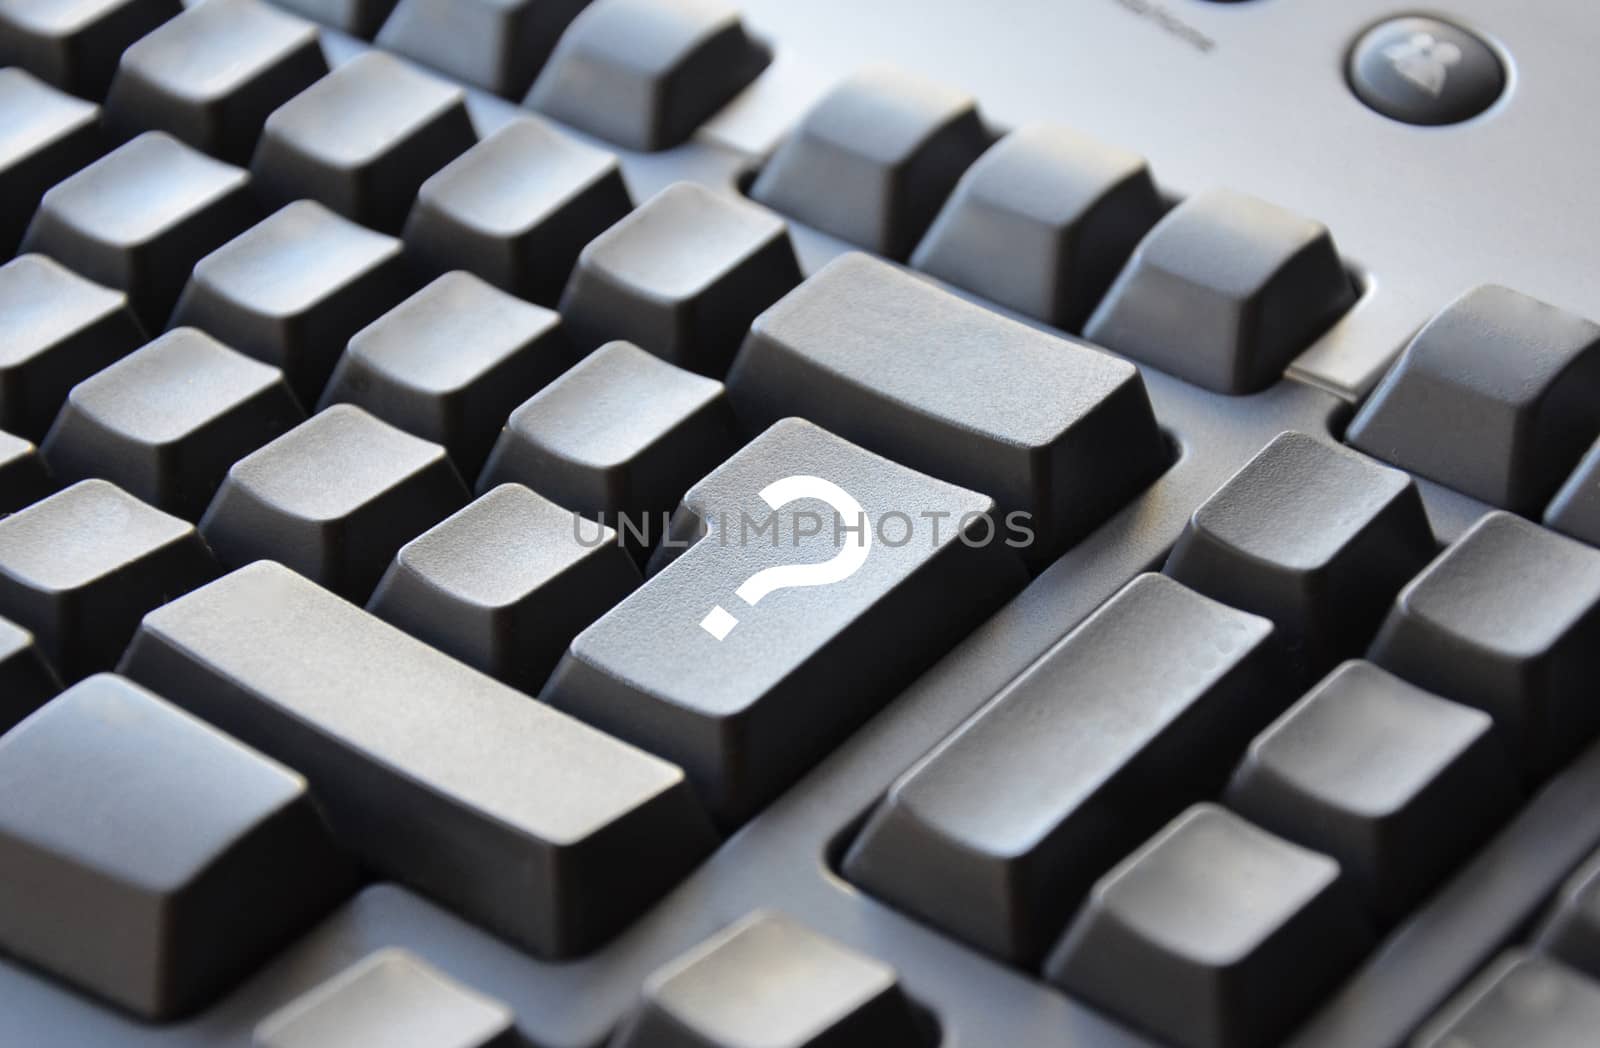 White question mark on grey keyboard by alentejano